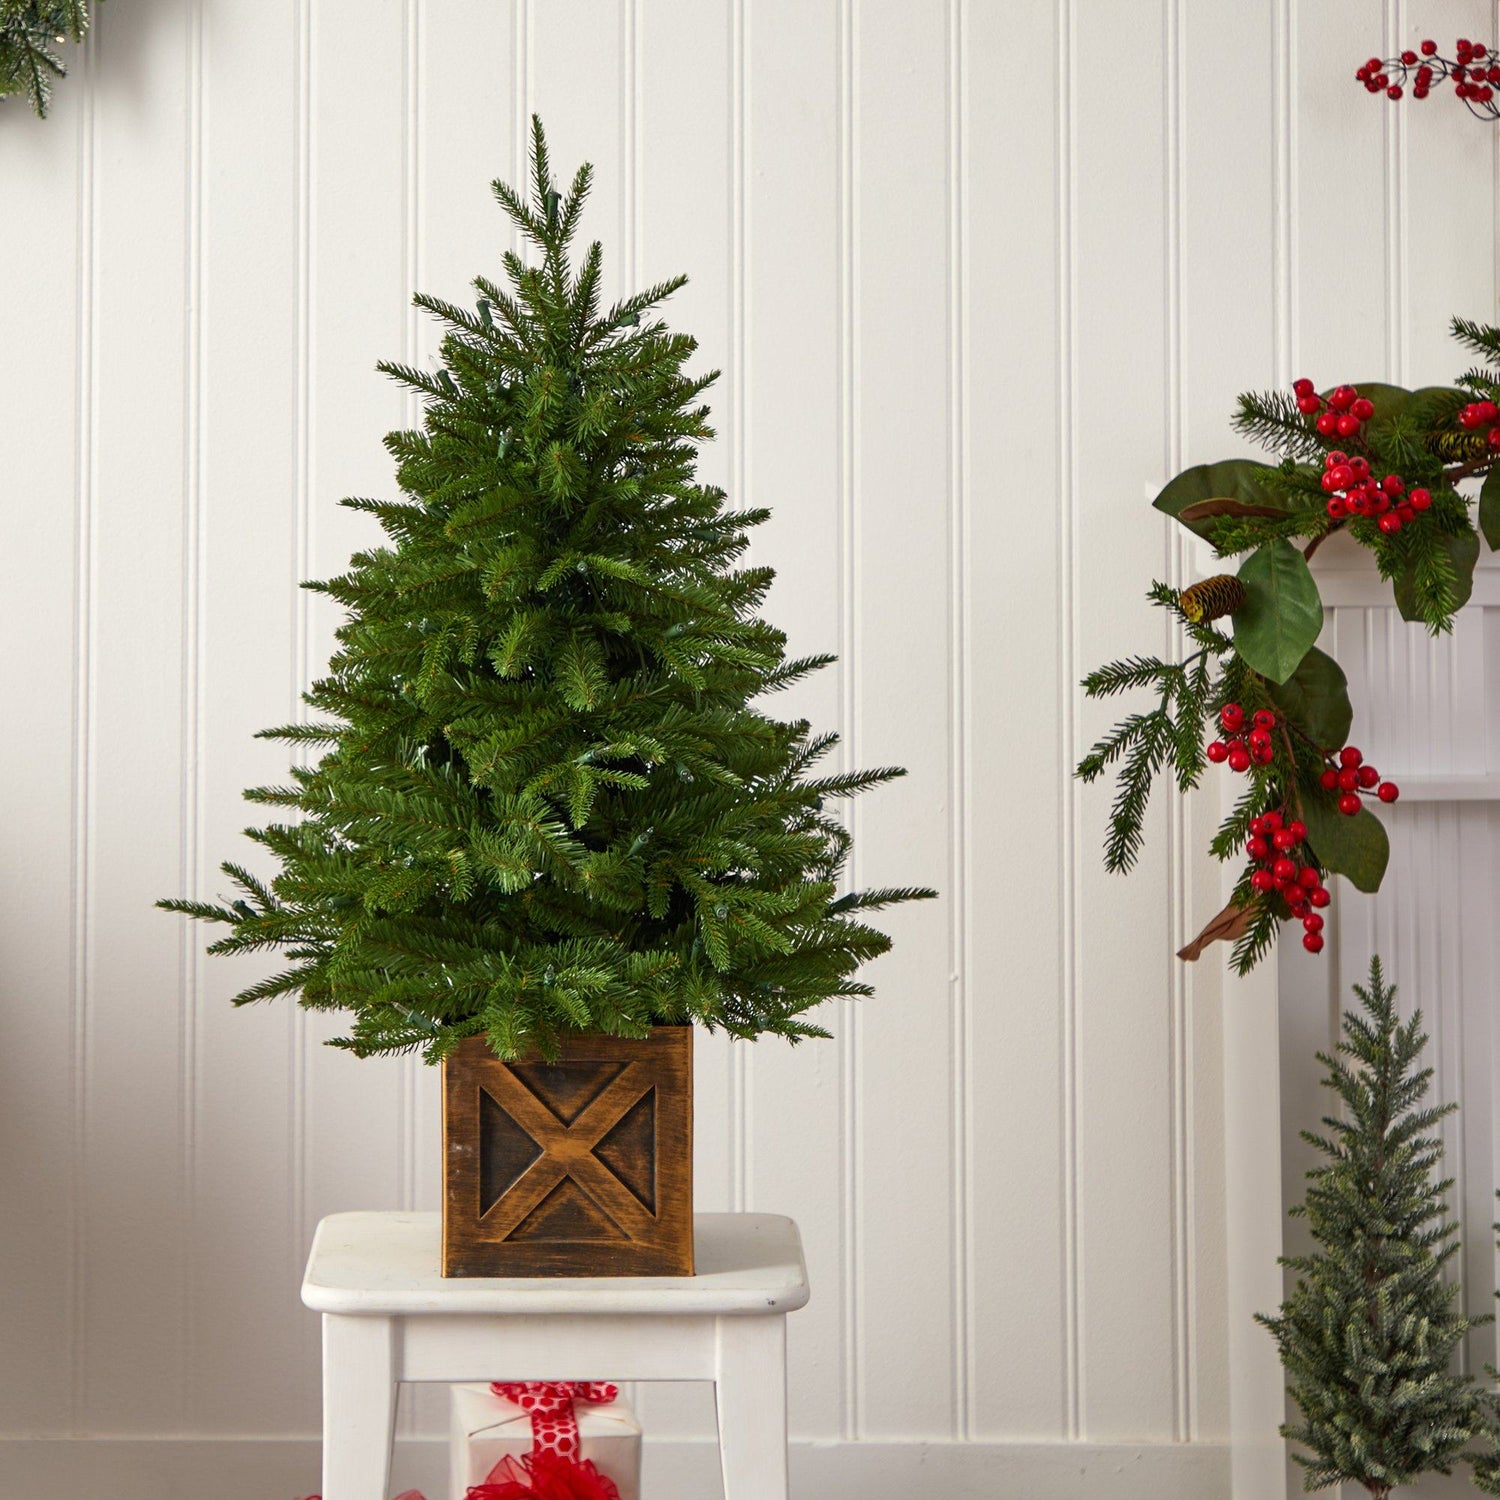 3’ Finland Fir Artificial Christmas Tree in Decorative Planter